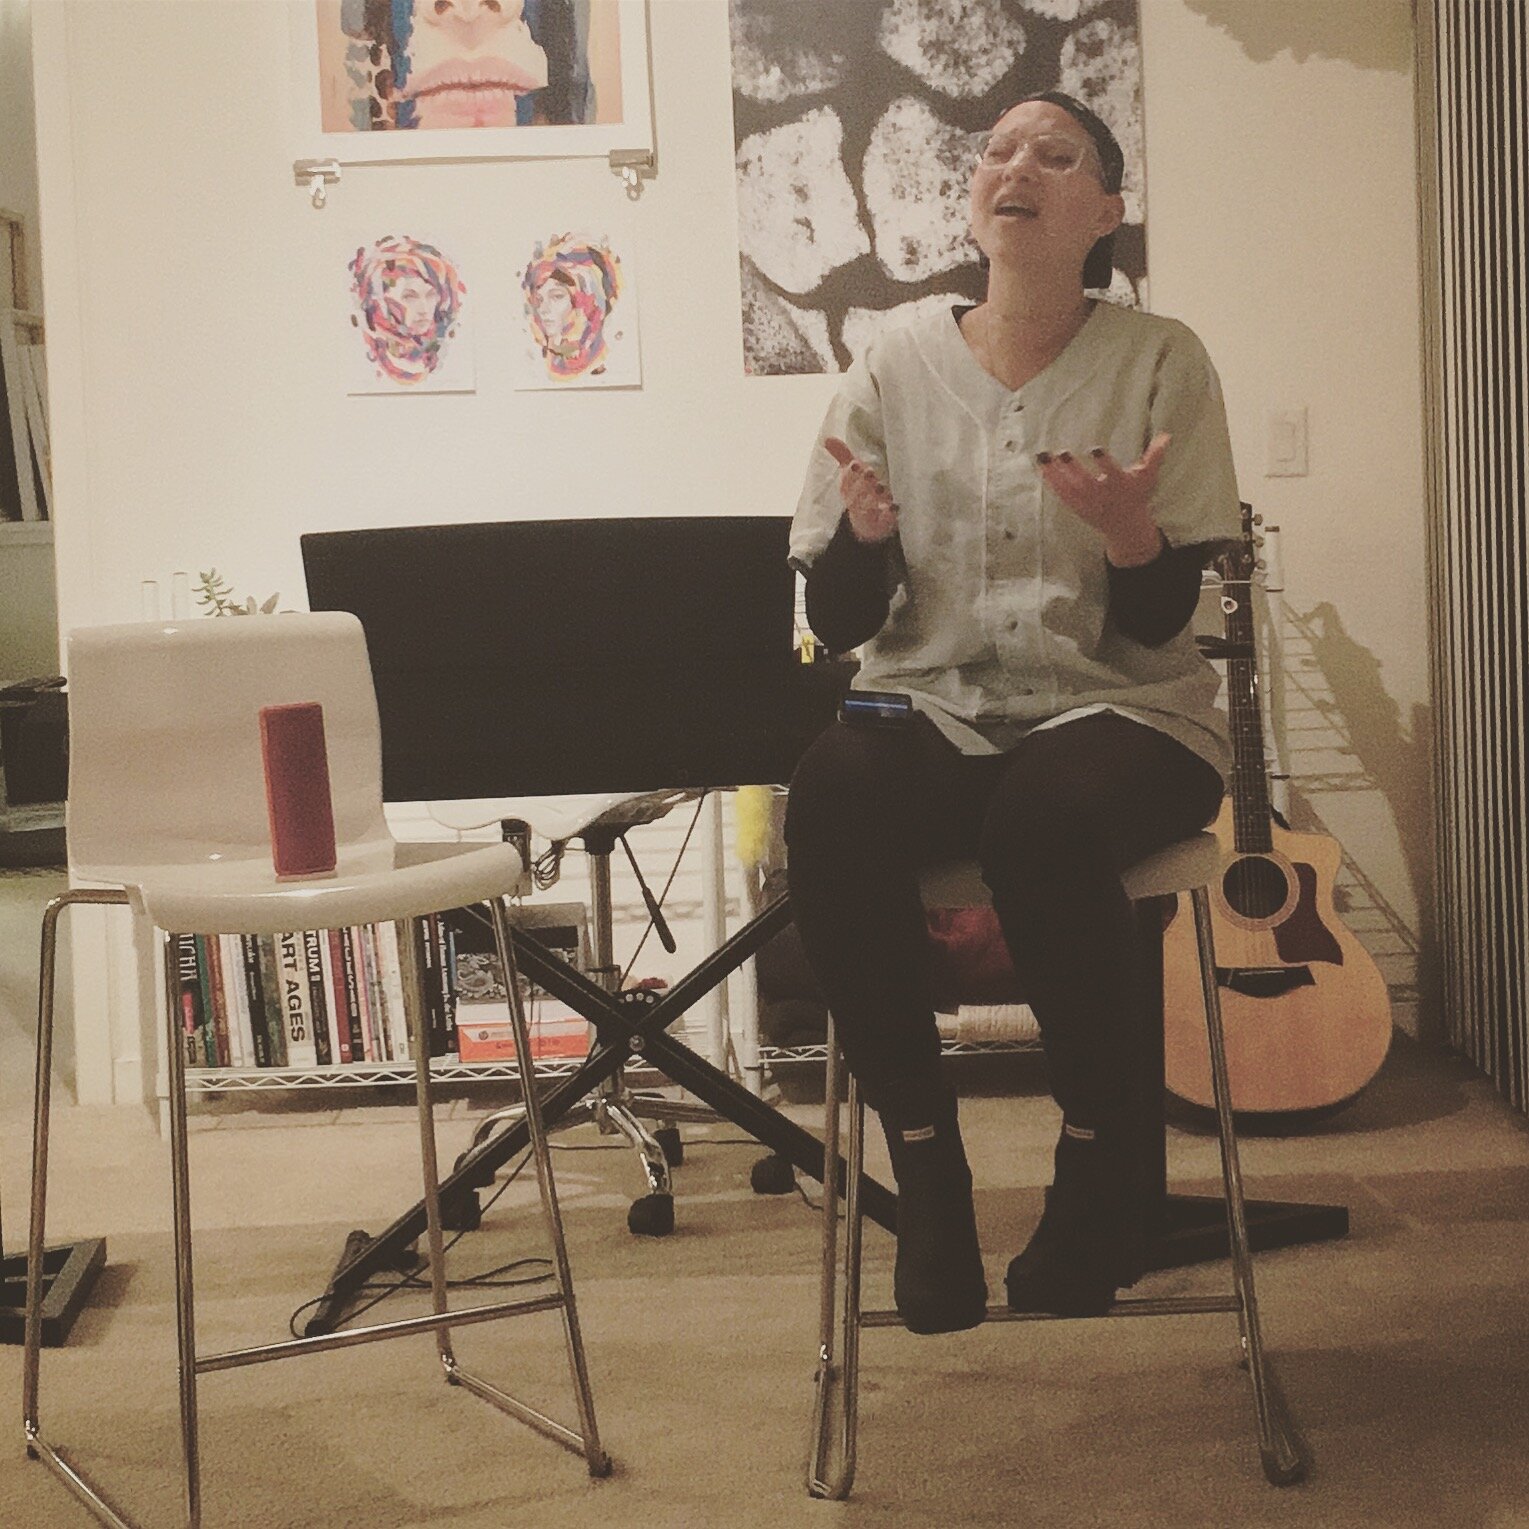 Singer performing at a vocal workshop in San Francisco